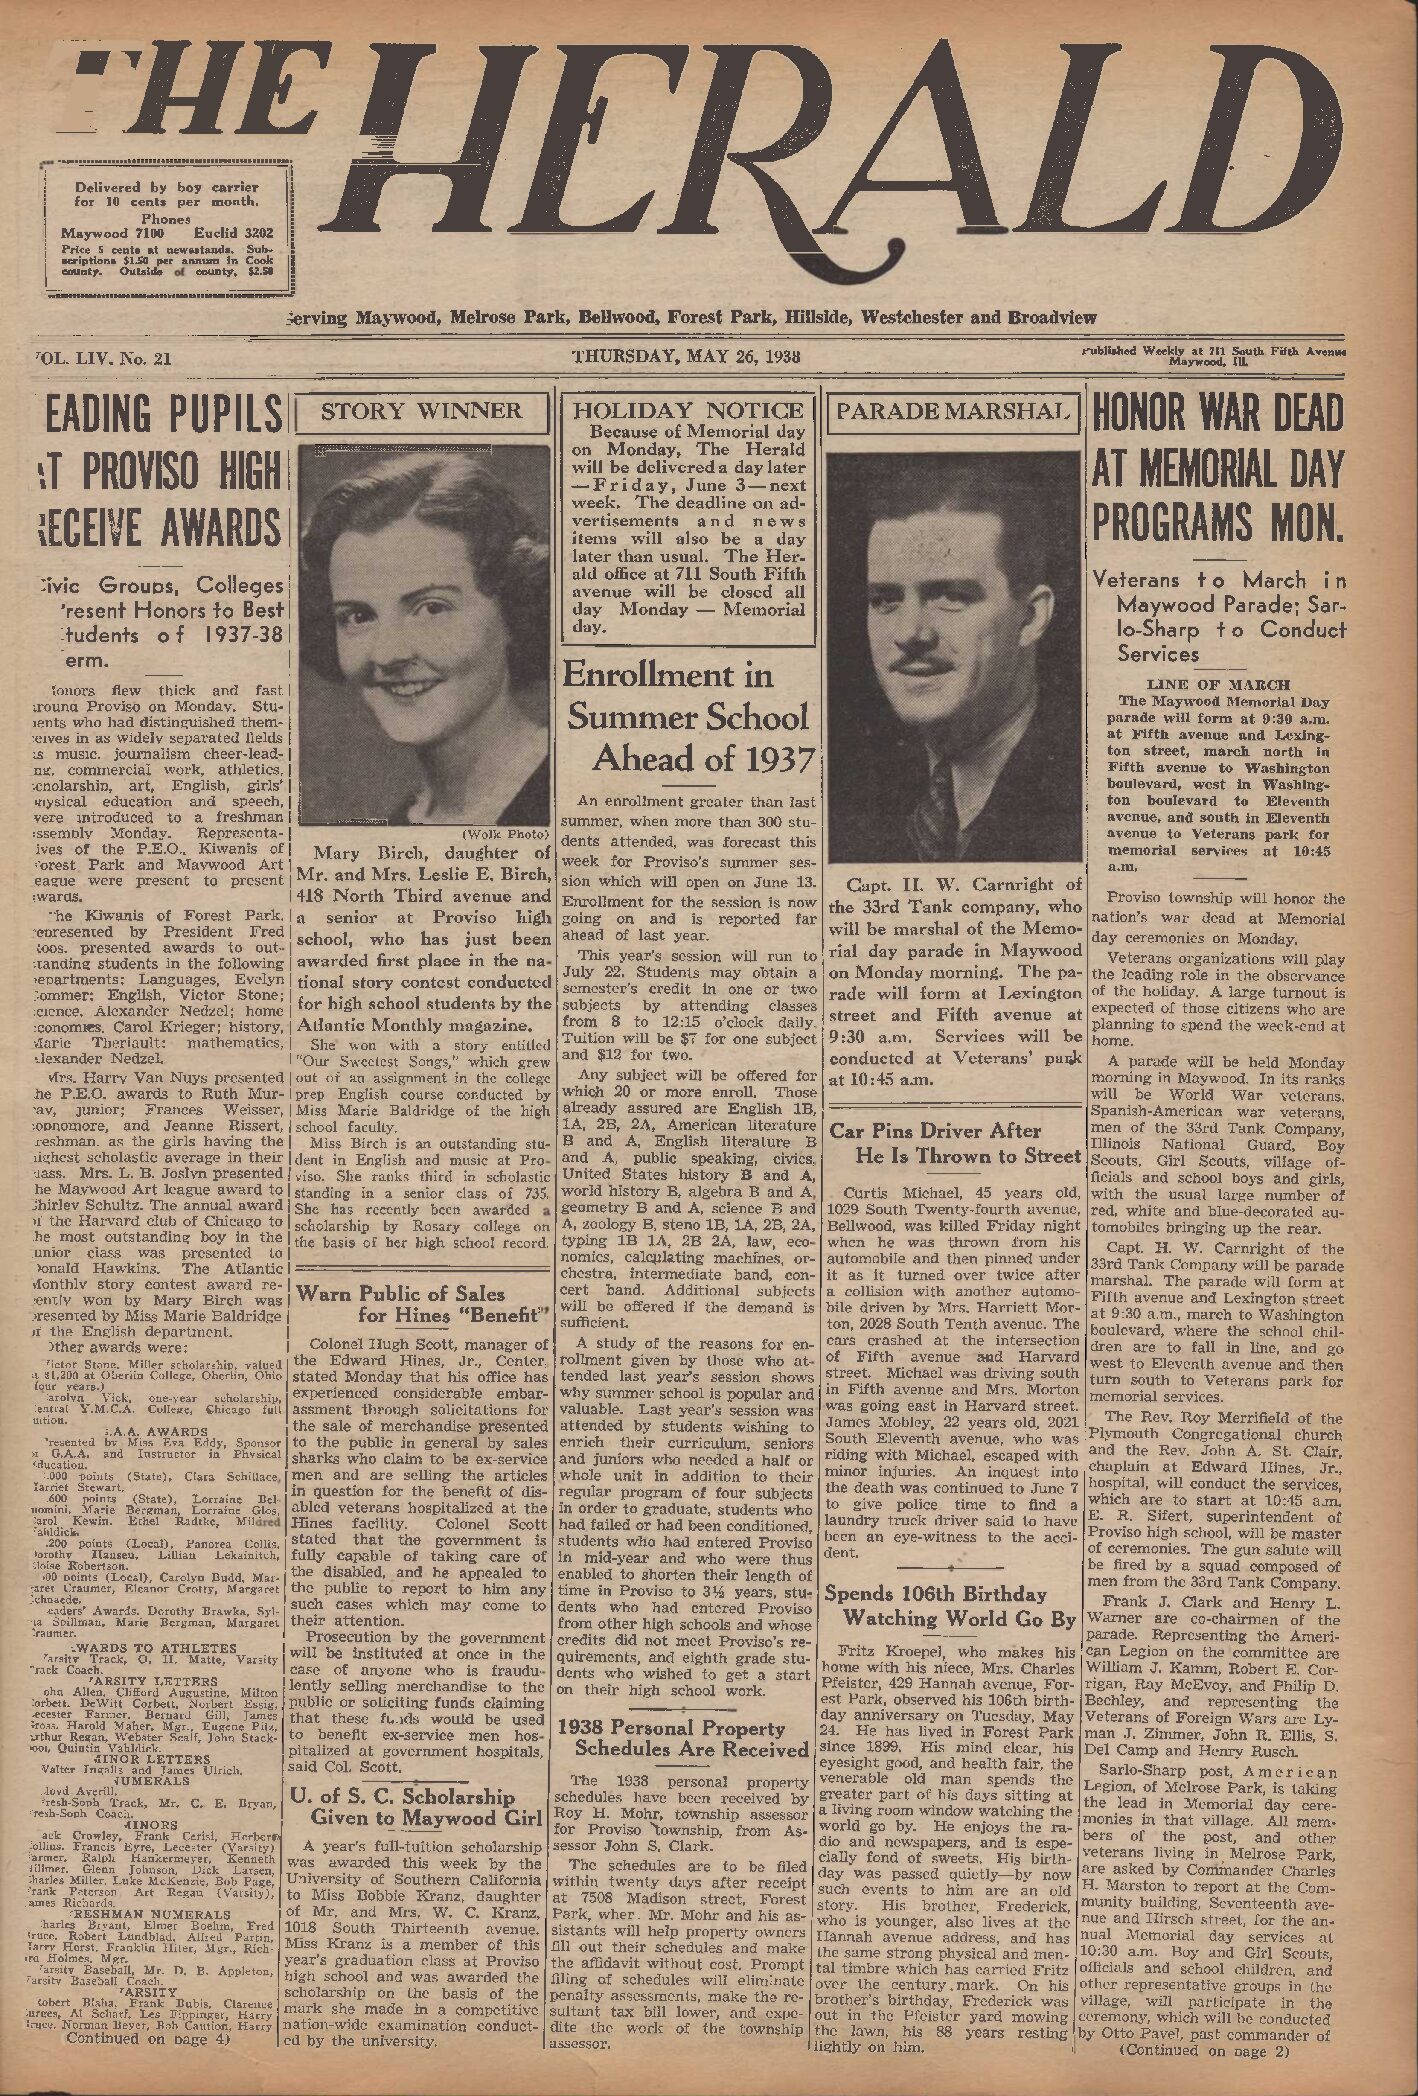 The Herald – 19380526